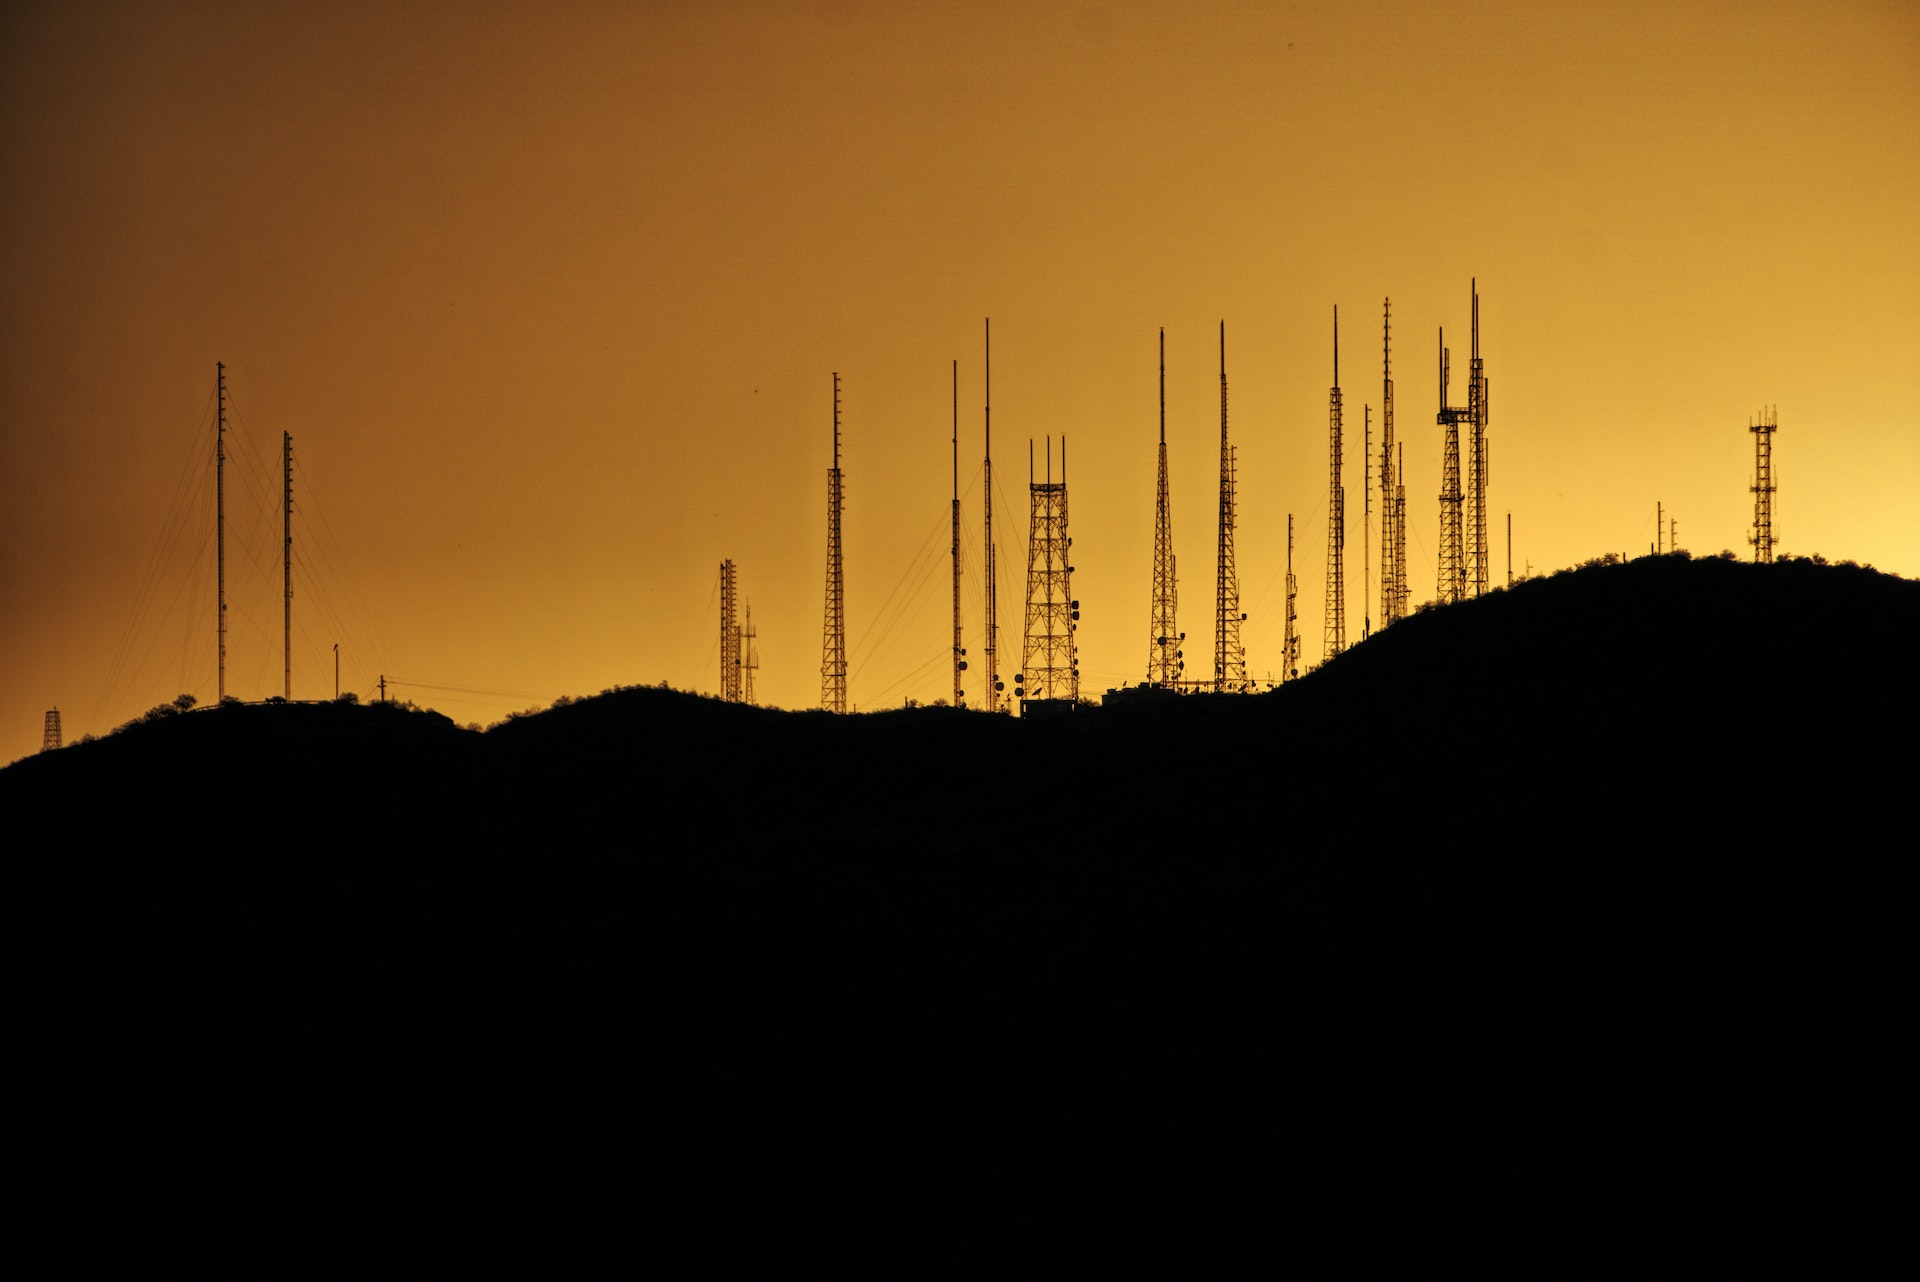 5G phone towers